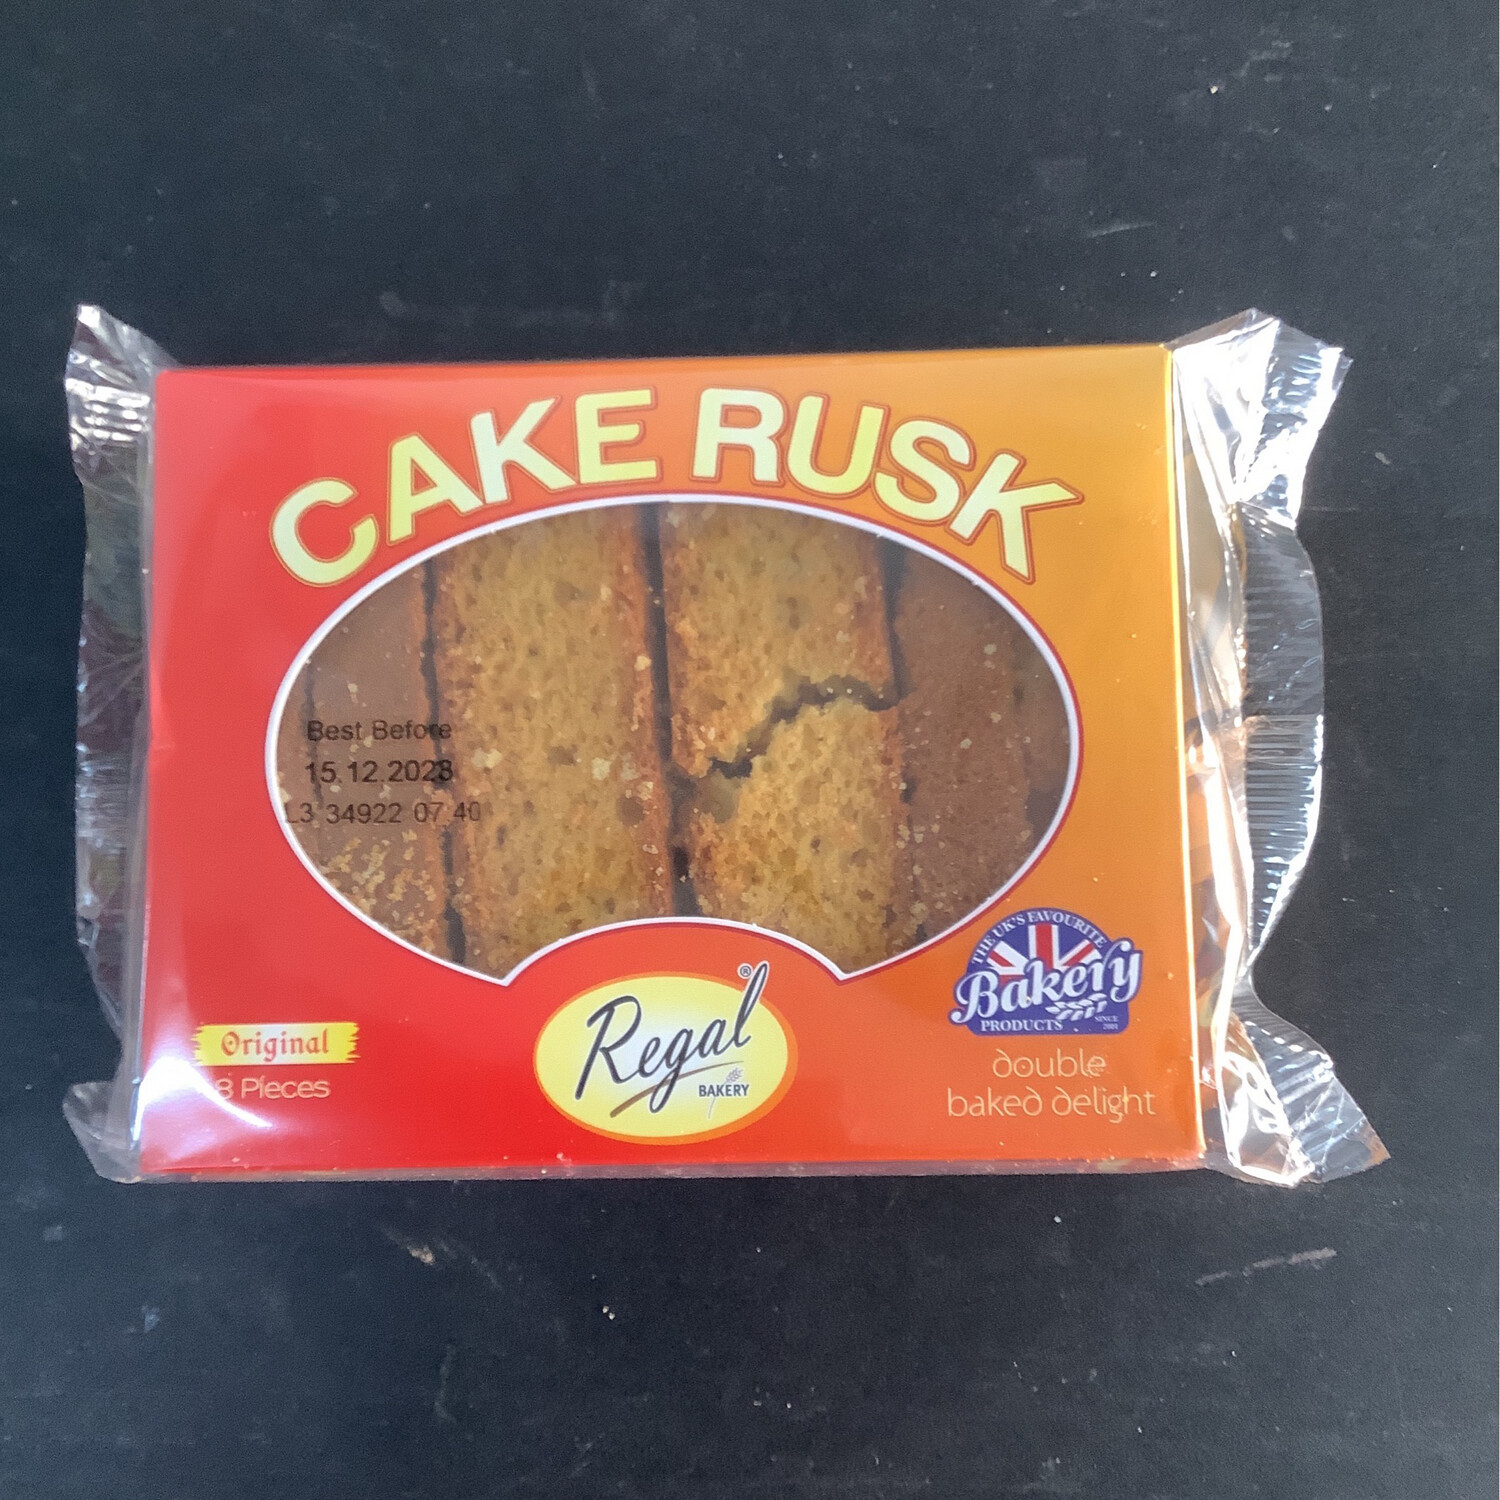 Regal cake Rusk 8pieces 170g